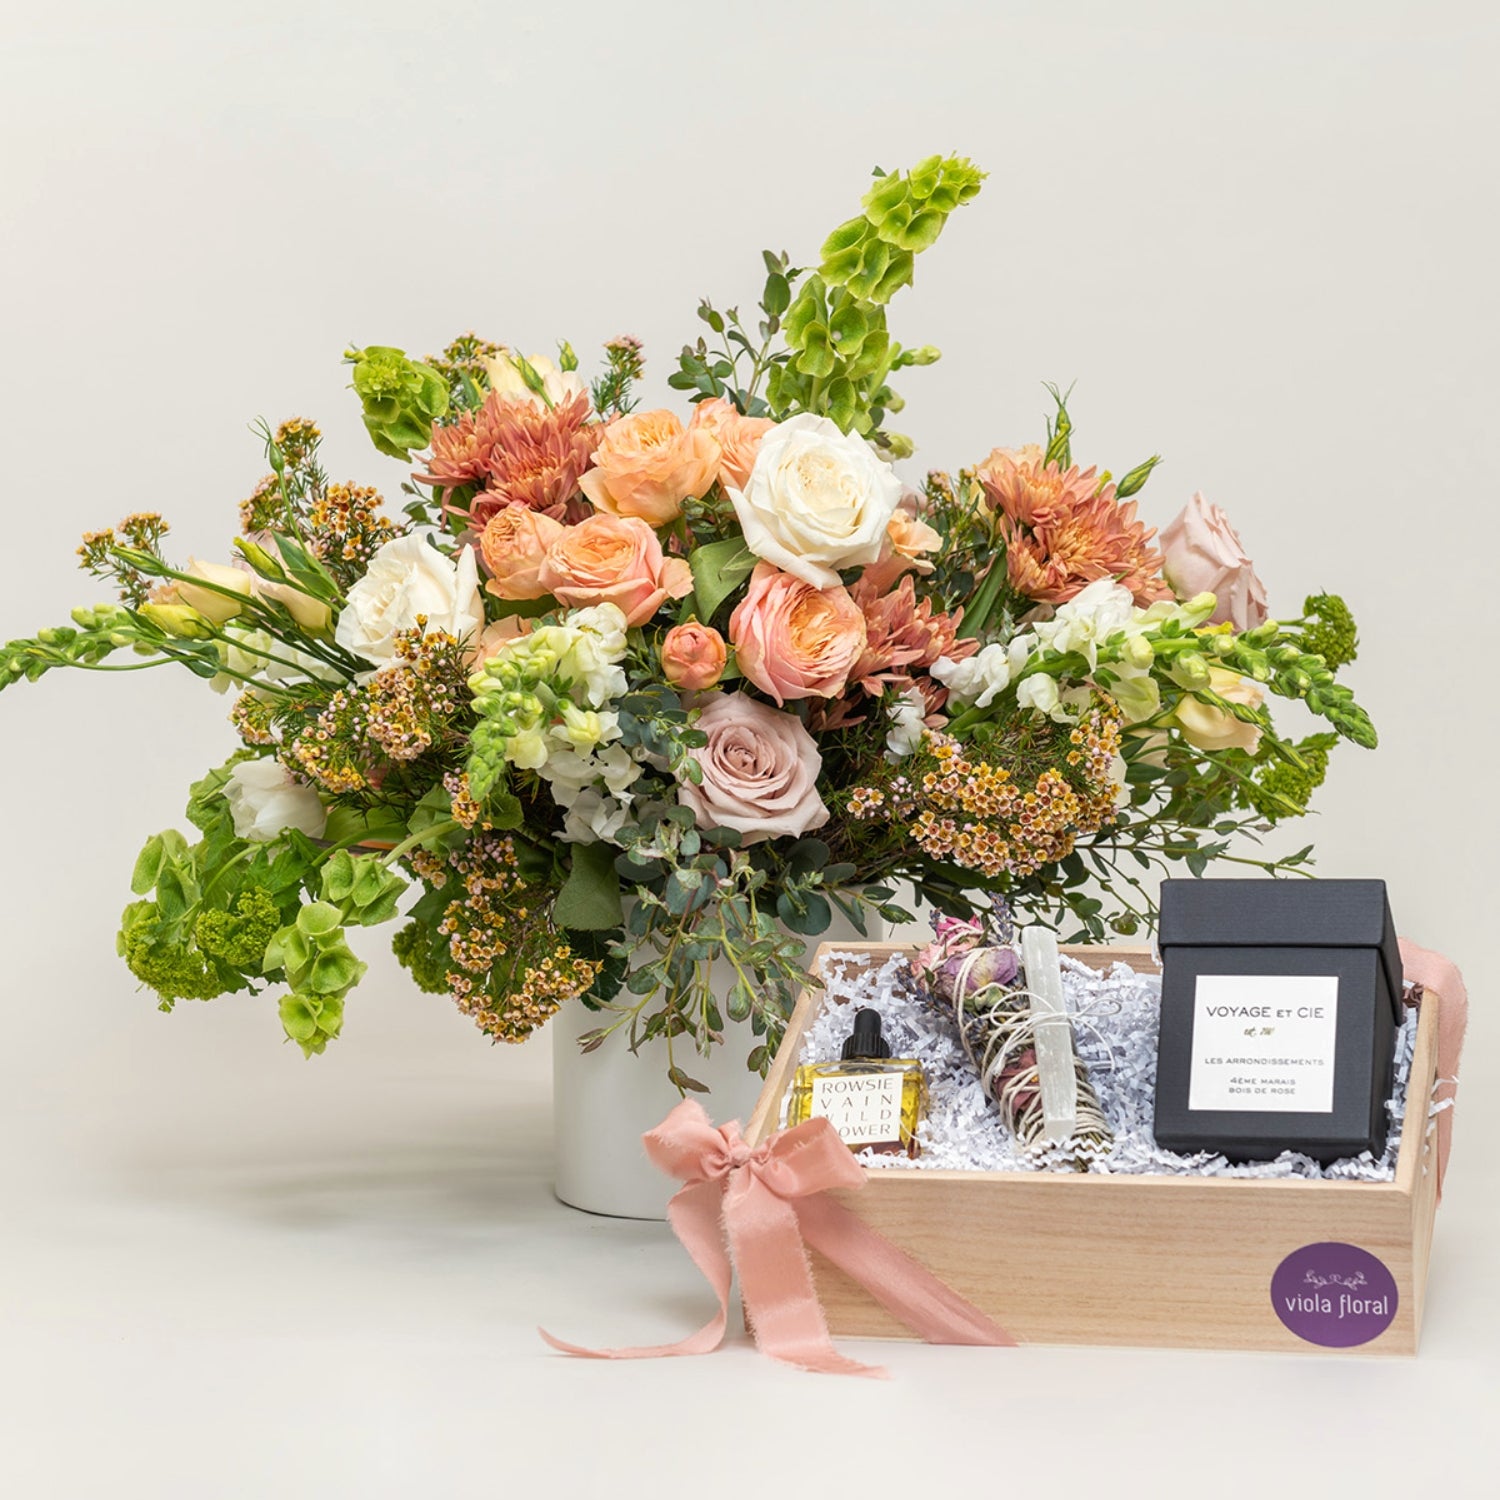 Purple Heart Box With Mixed Flowers – Dream Box LA